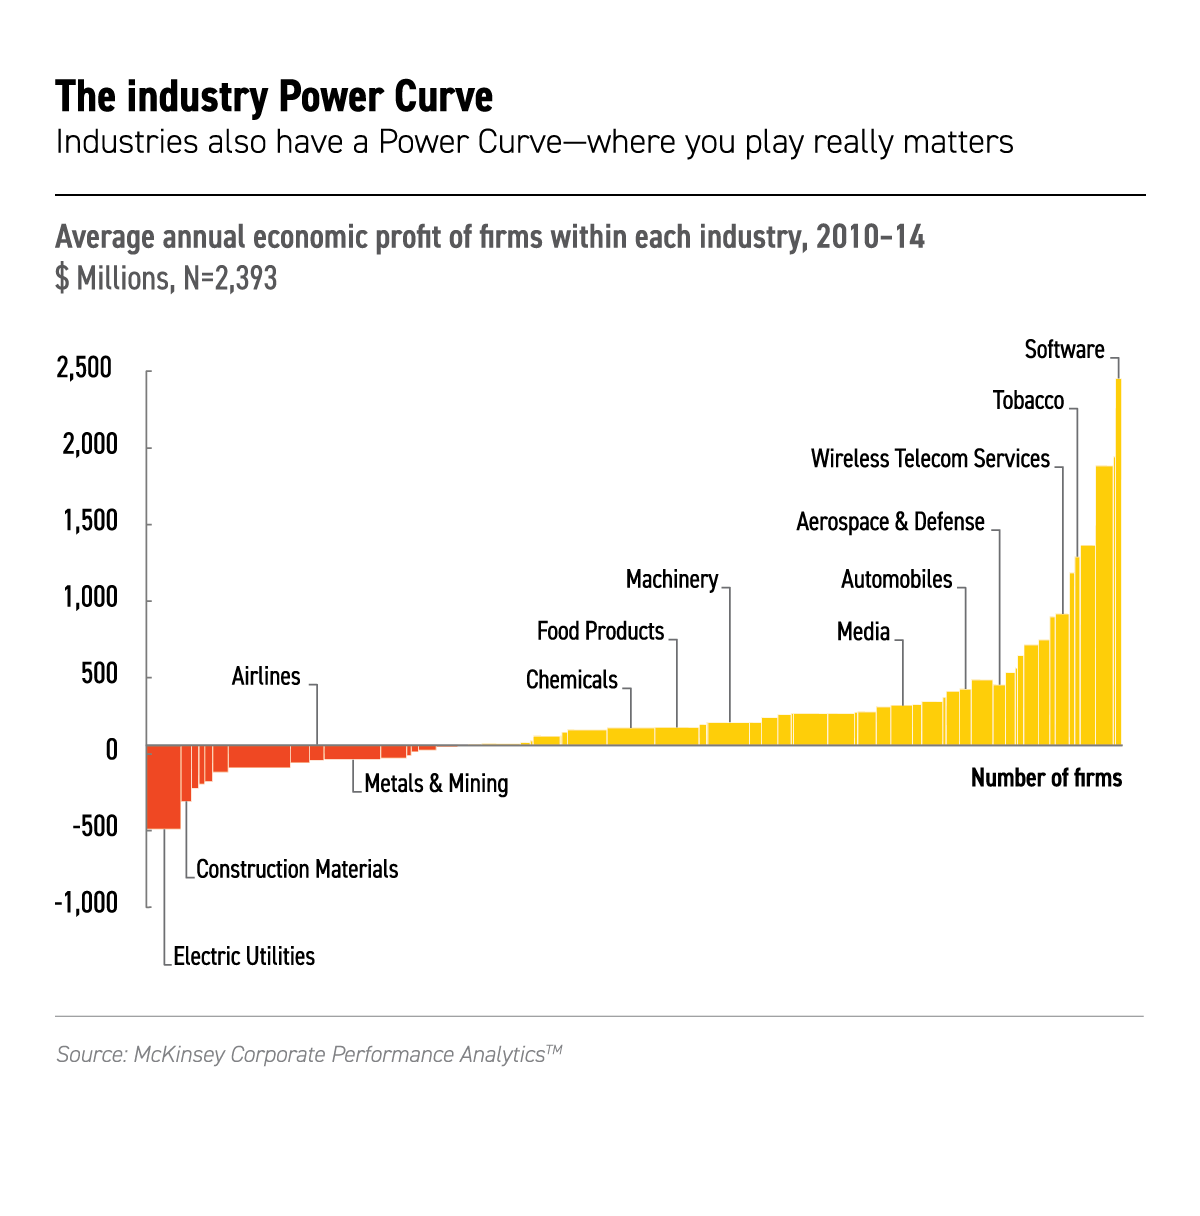 Economic profit by industry, 2010-2014